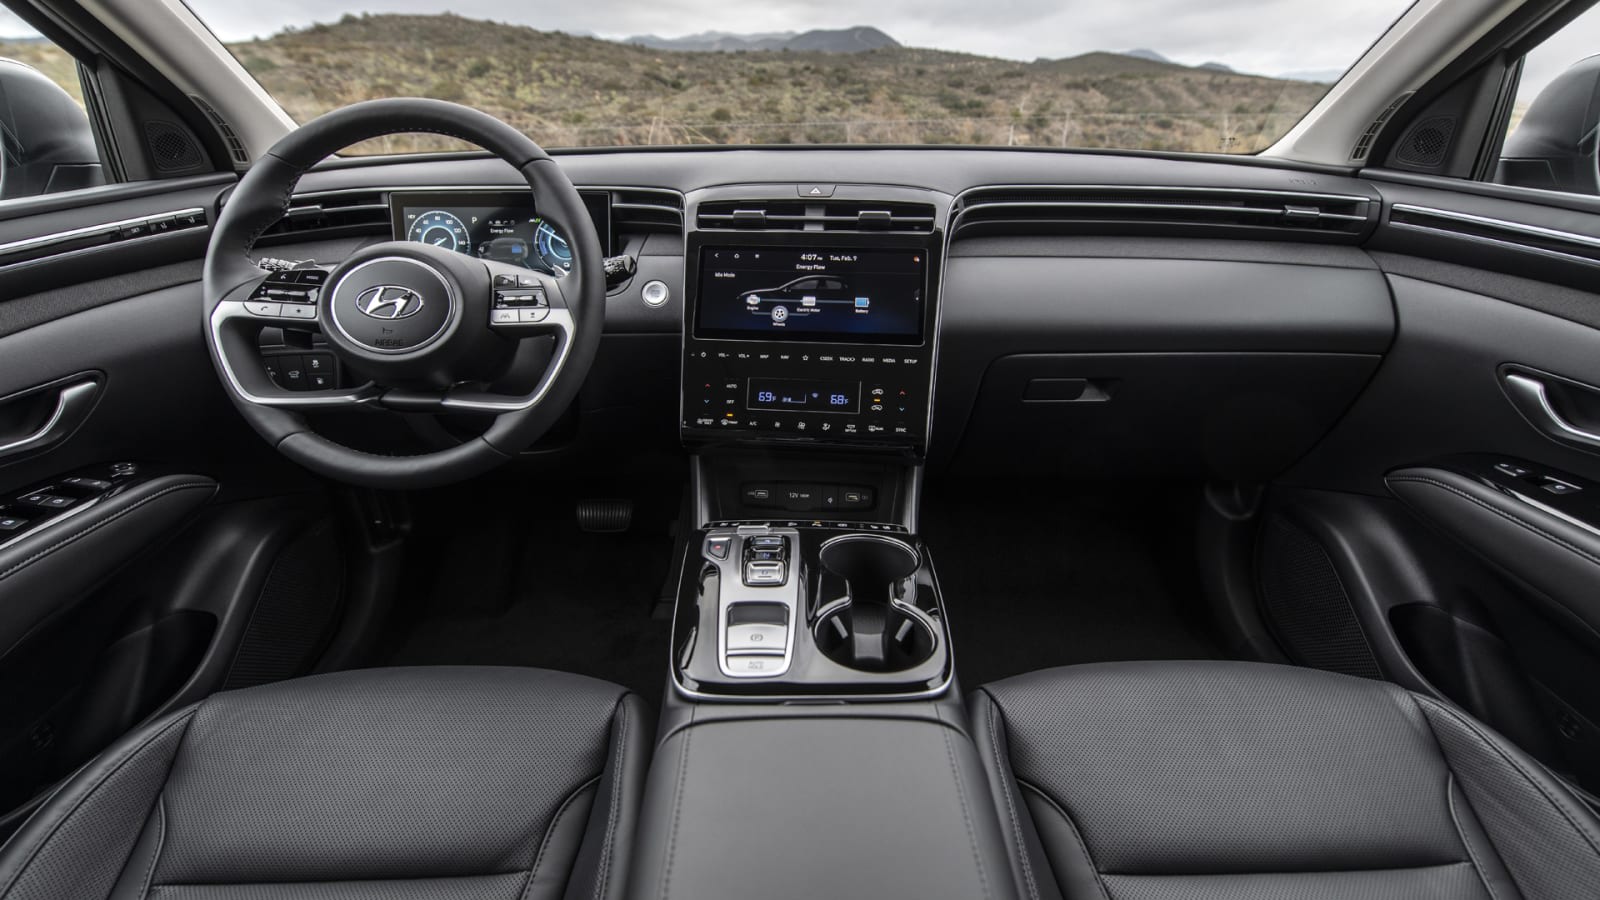 2023 Hyundai Tucson Review: Great hybrids, wild style, big space - Autoblog